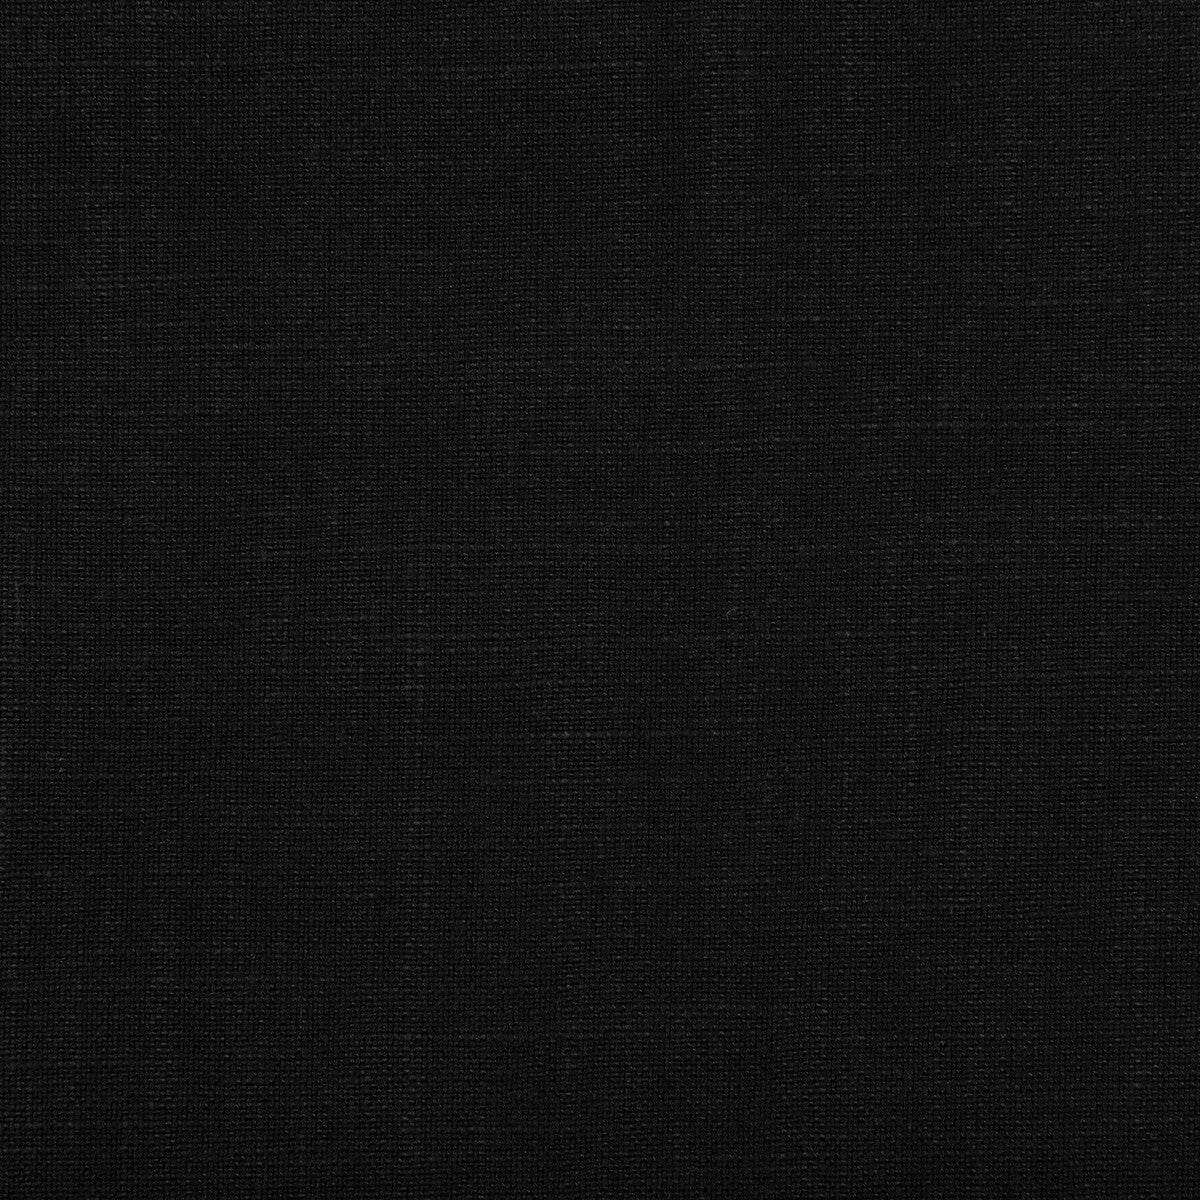 Aura fabric in noir color - pattern 35520.8.0 - by Kravet Design